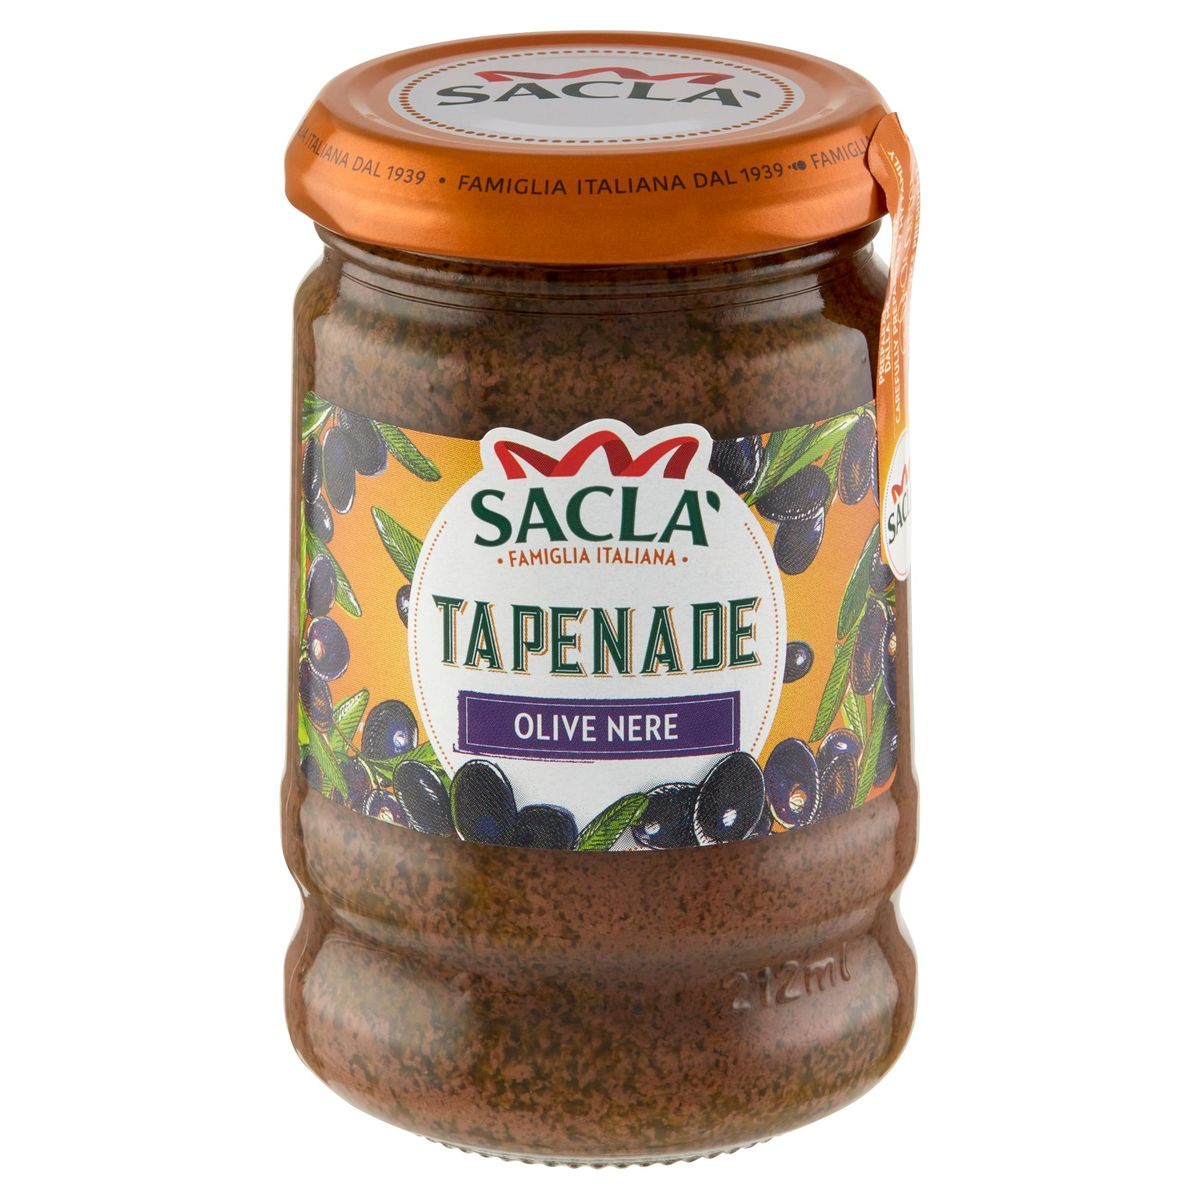 Sacla Tapenade Olive Nere 190 g